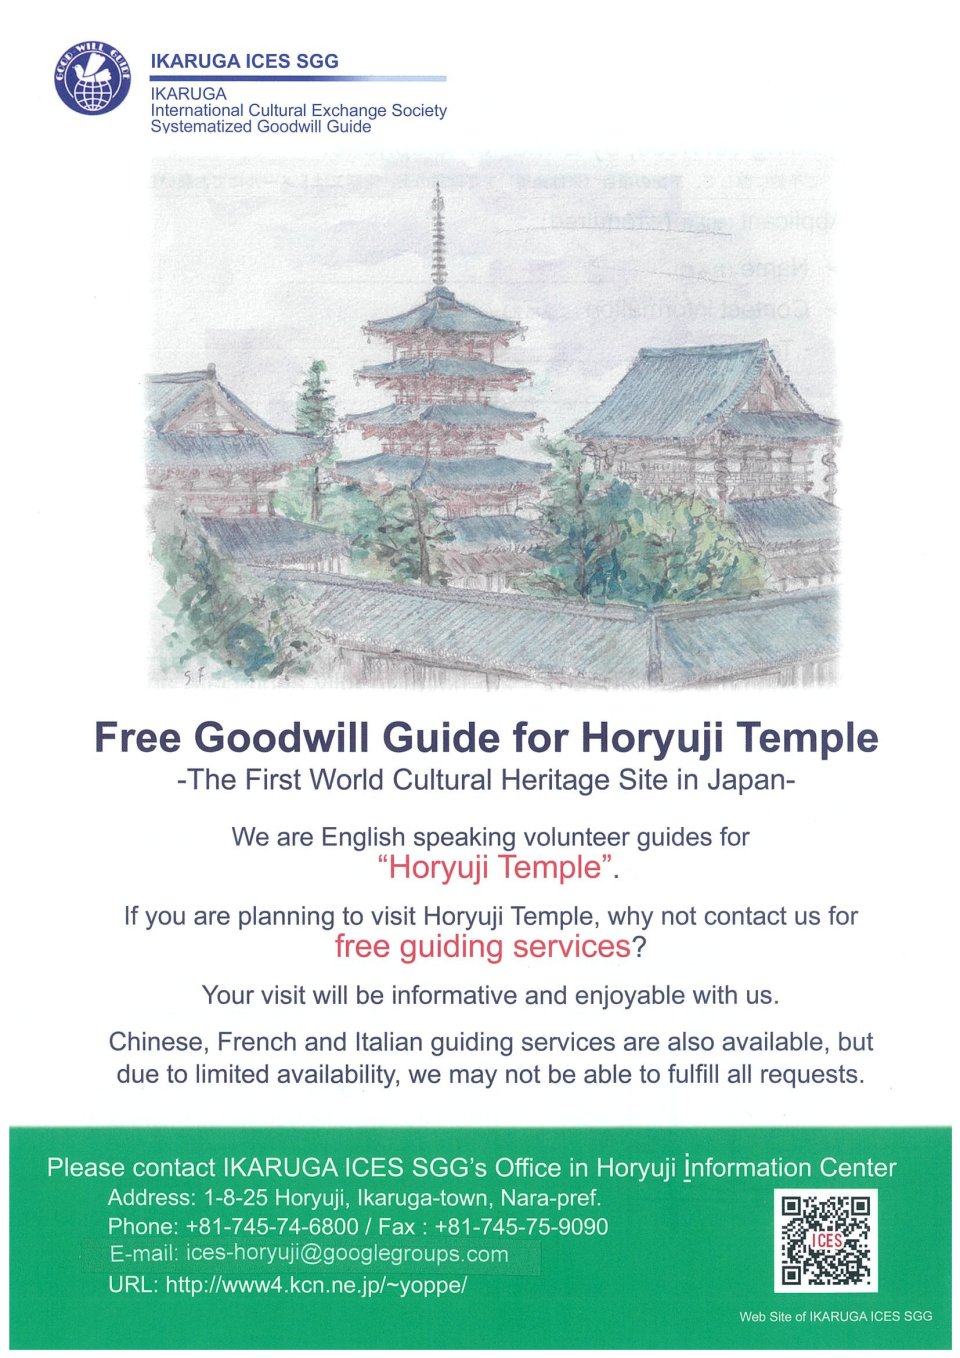 Horyuji Temple Free Goodwill Guide!